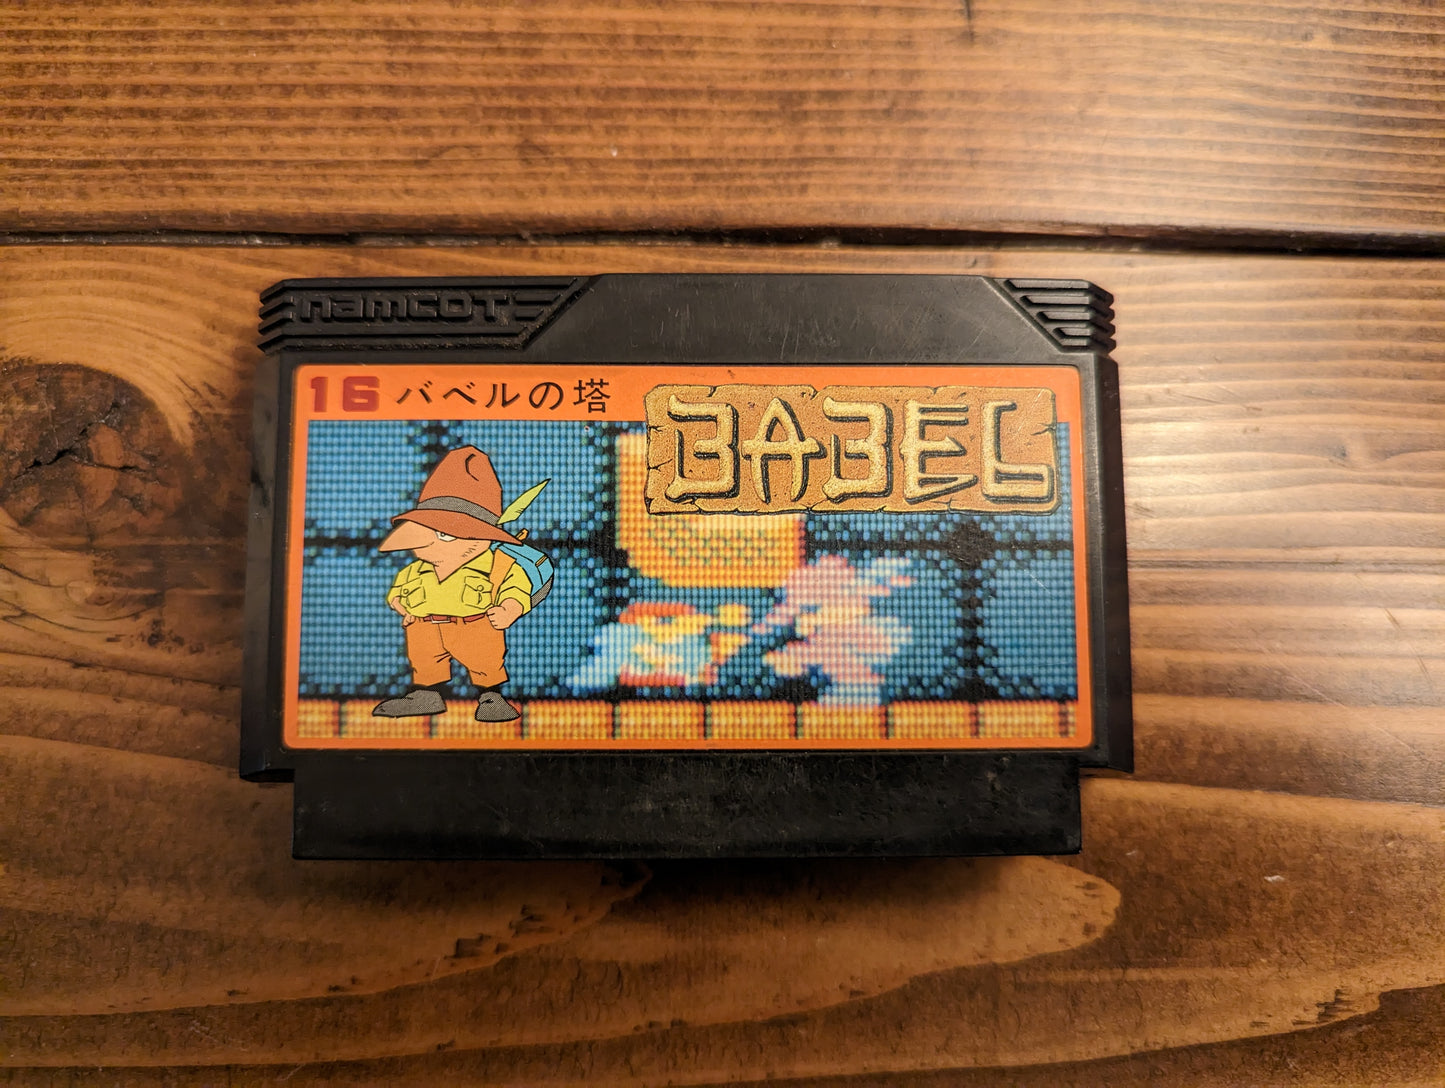 Babel no Tou - Nintendo Famicom - Loose Cart